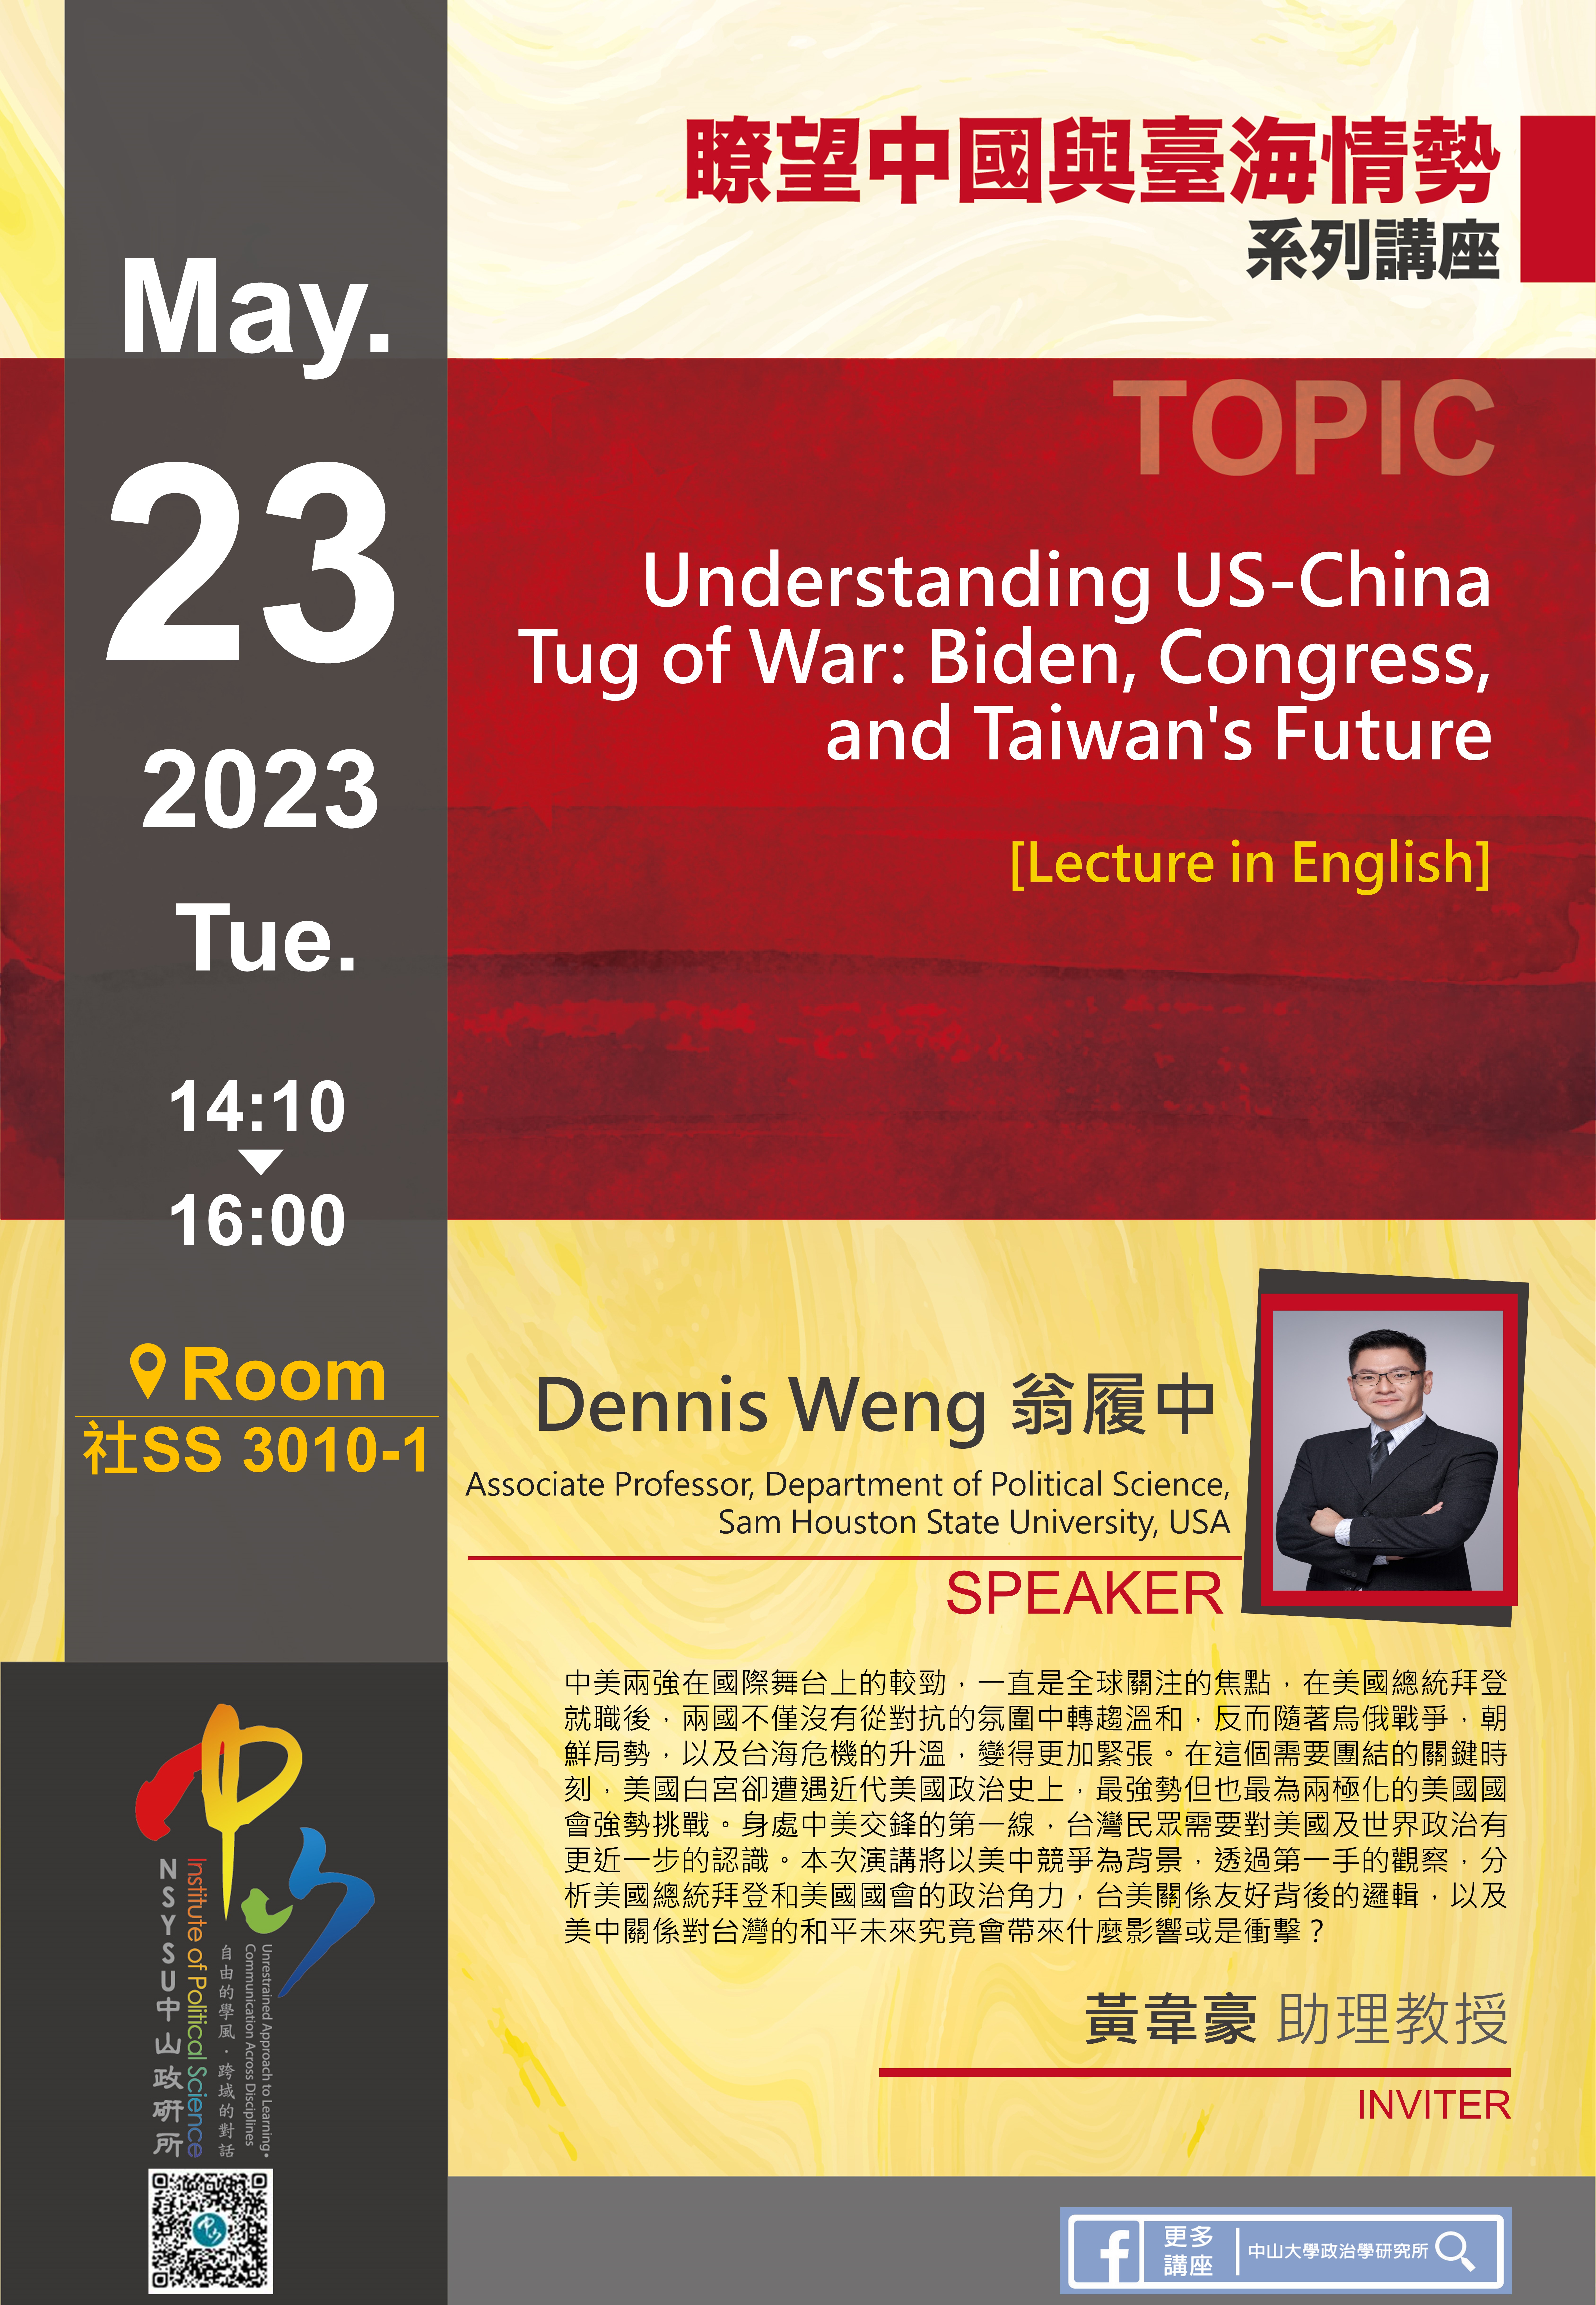 Dennis Weng 翁履中：Understanding US-China Tug of War: Biden, Congress, and Taiwan's Future